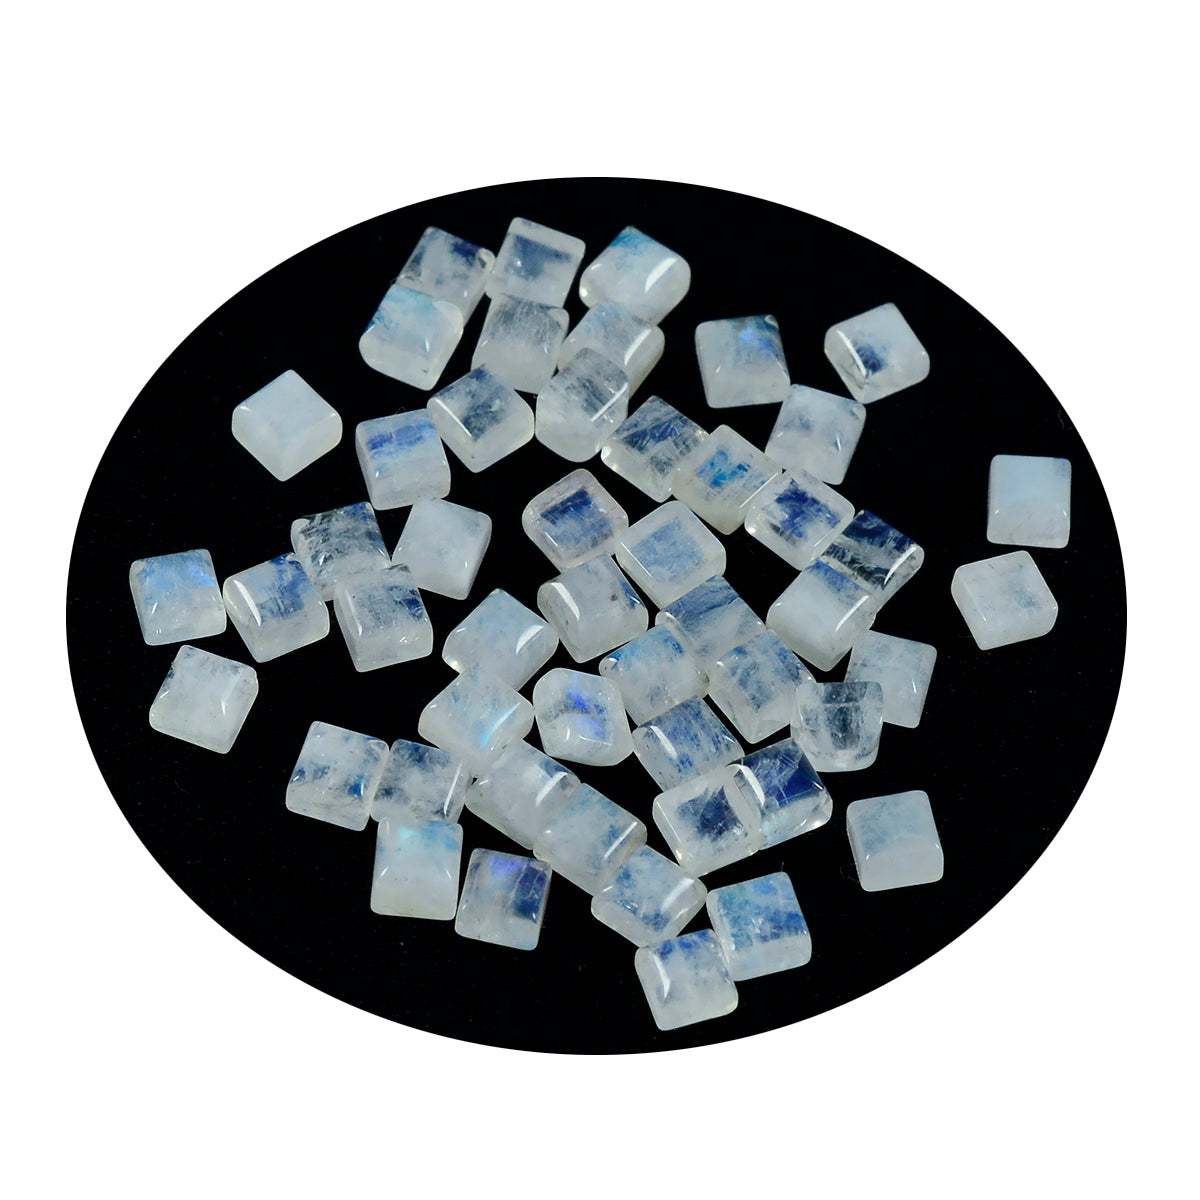 Riyogems 1PC White Rainbow Moonstone Cabochon 4x4 mm Square Shape nice-looking Quality Gemstone